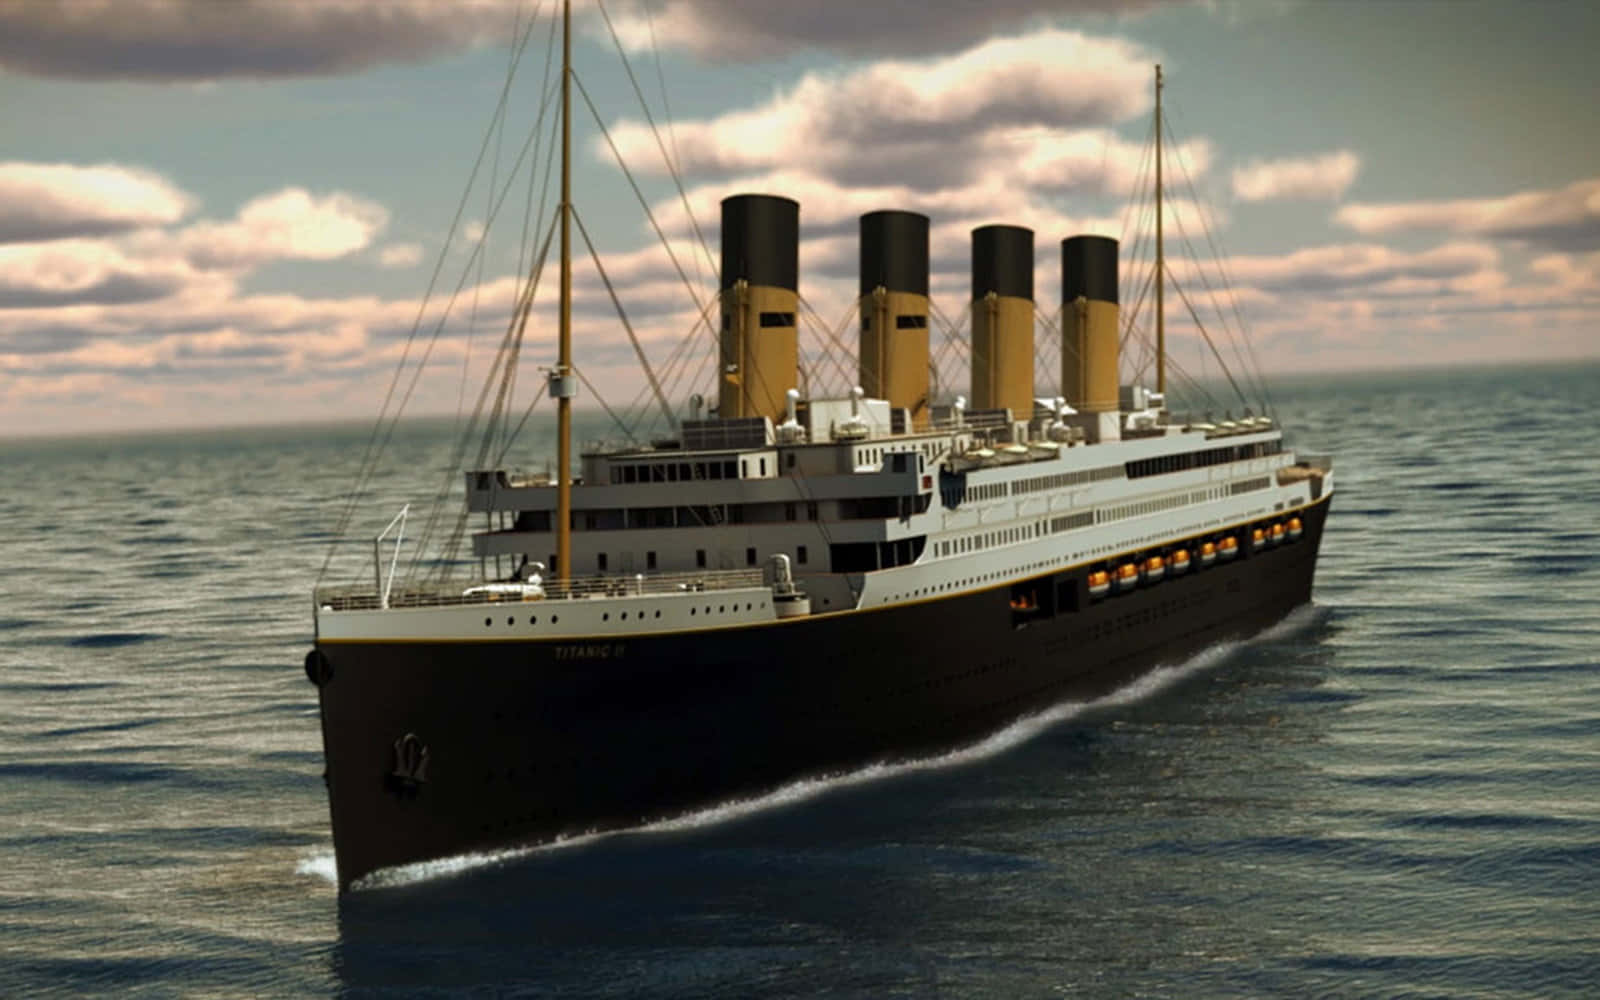 "Sinking of the Titanic"